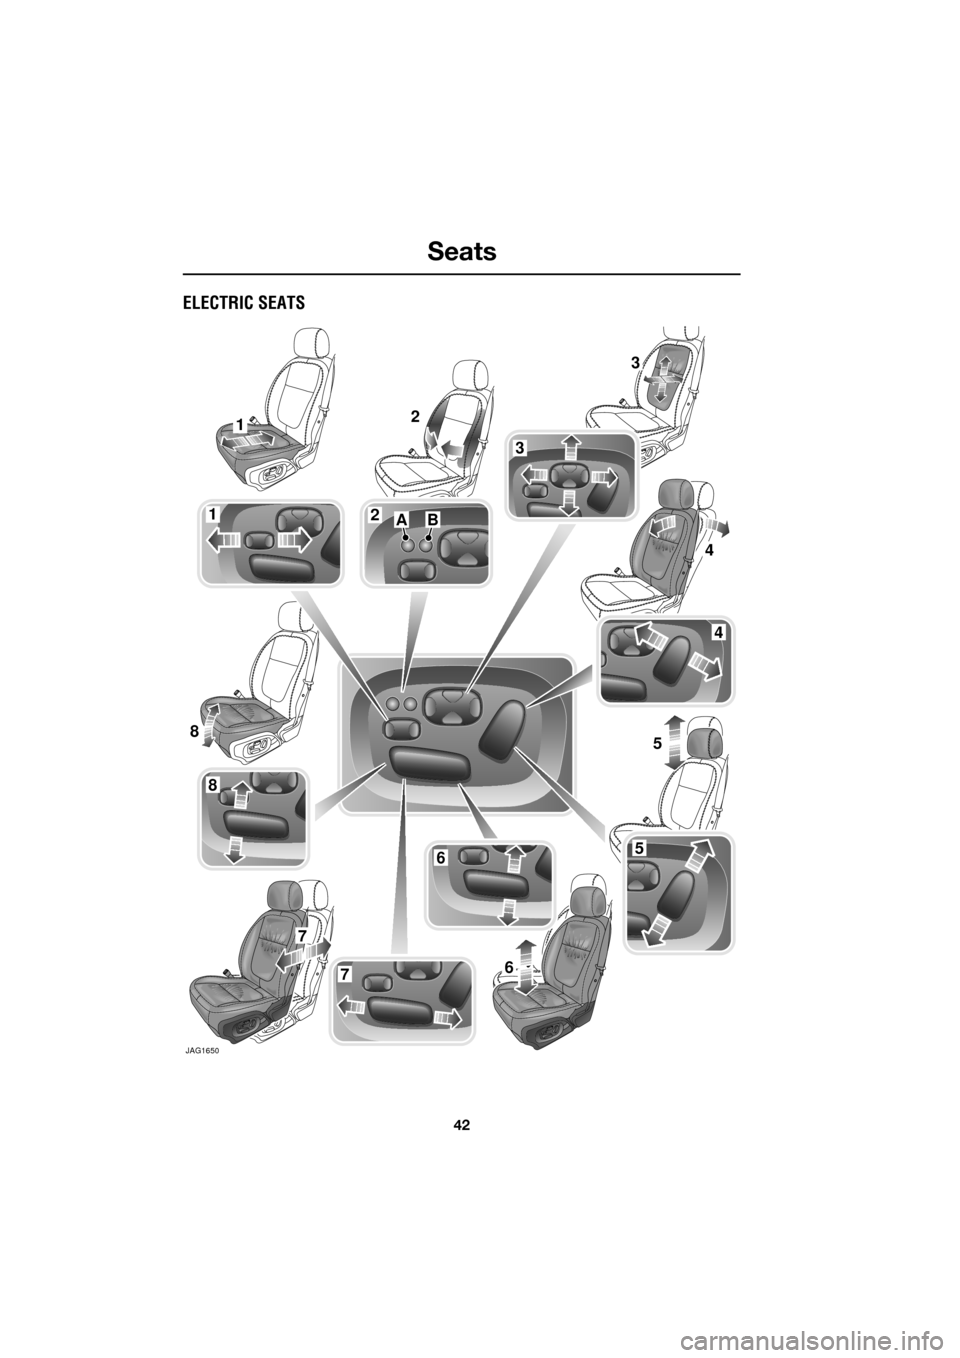 JAGUAR XF 2009 1.G Owners Manual Seats
42
               
ELECTRIC SEATS
JAG1650
1
1
2
2AB
3
3
4
56
7
8
4
5
67
8 